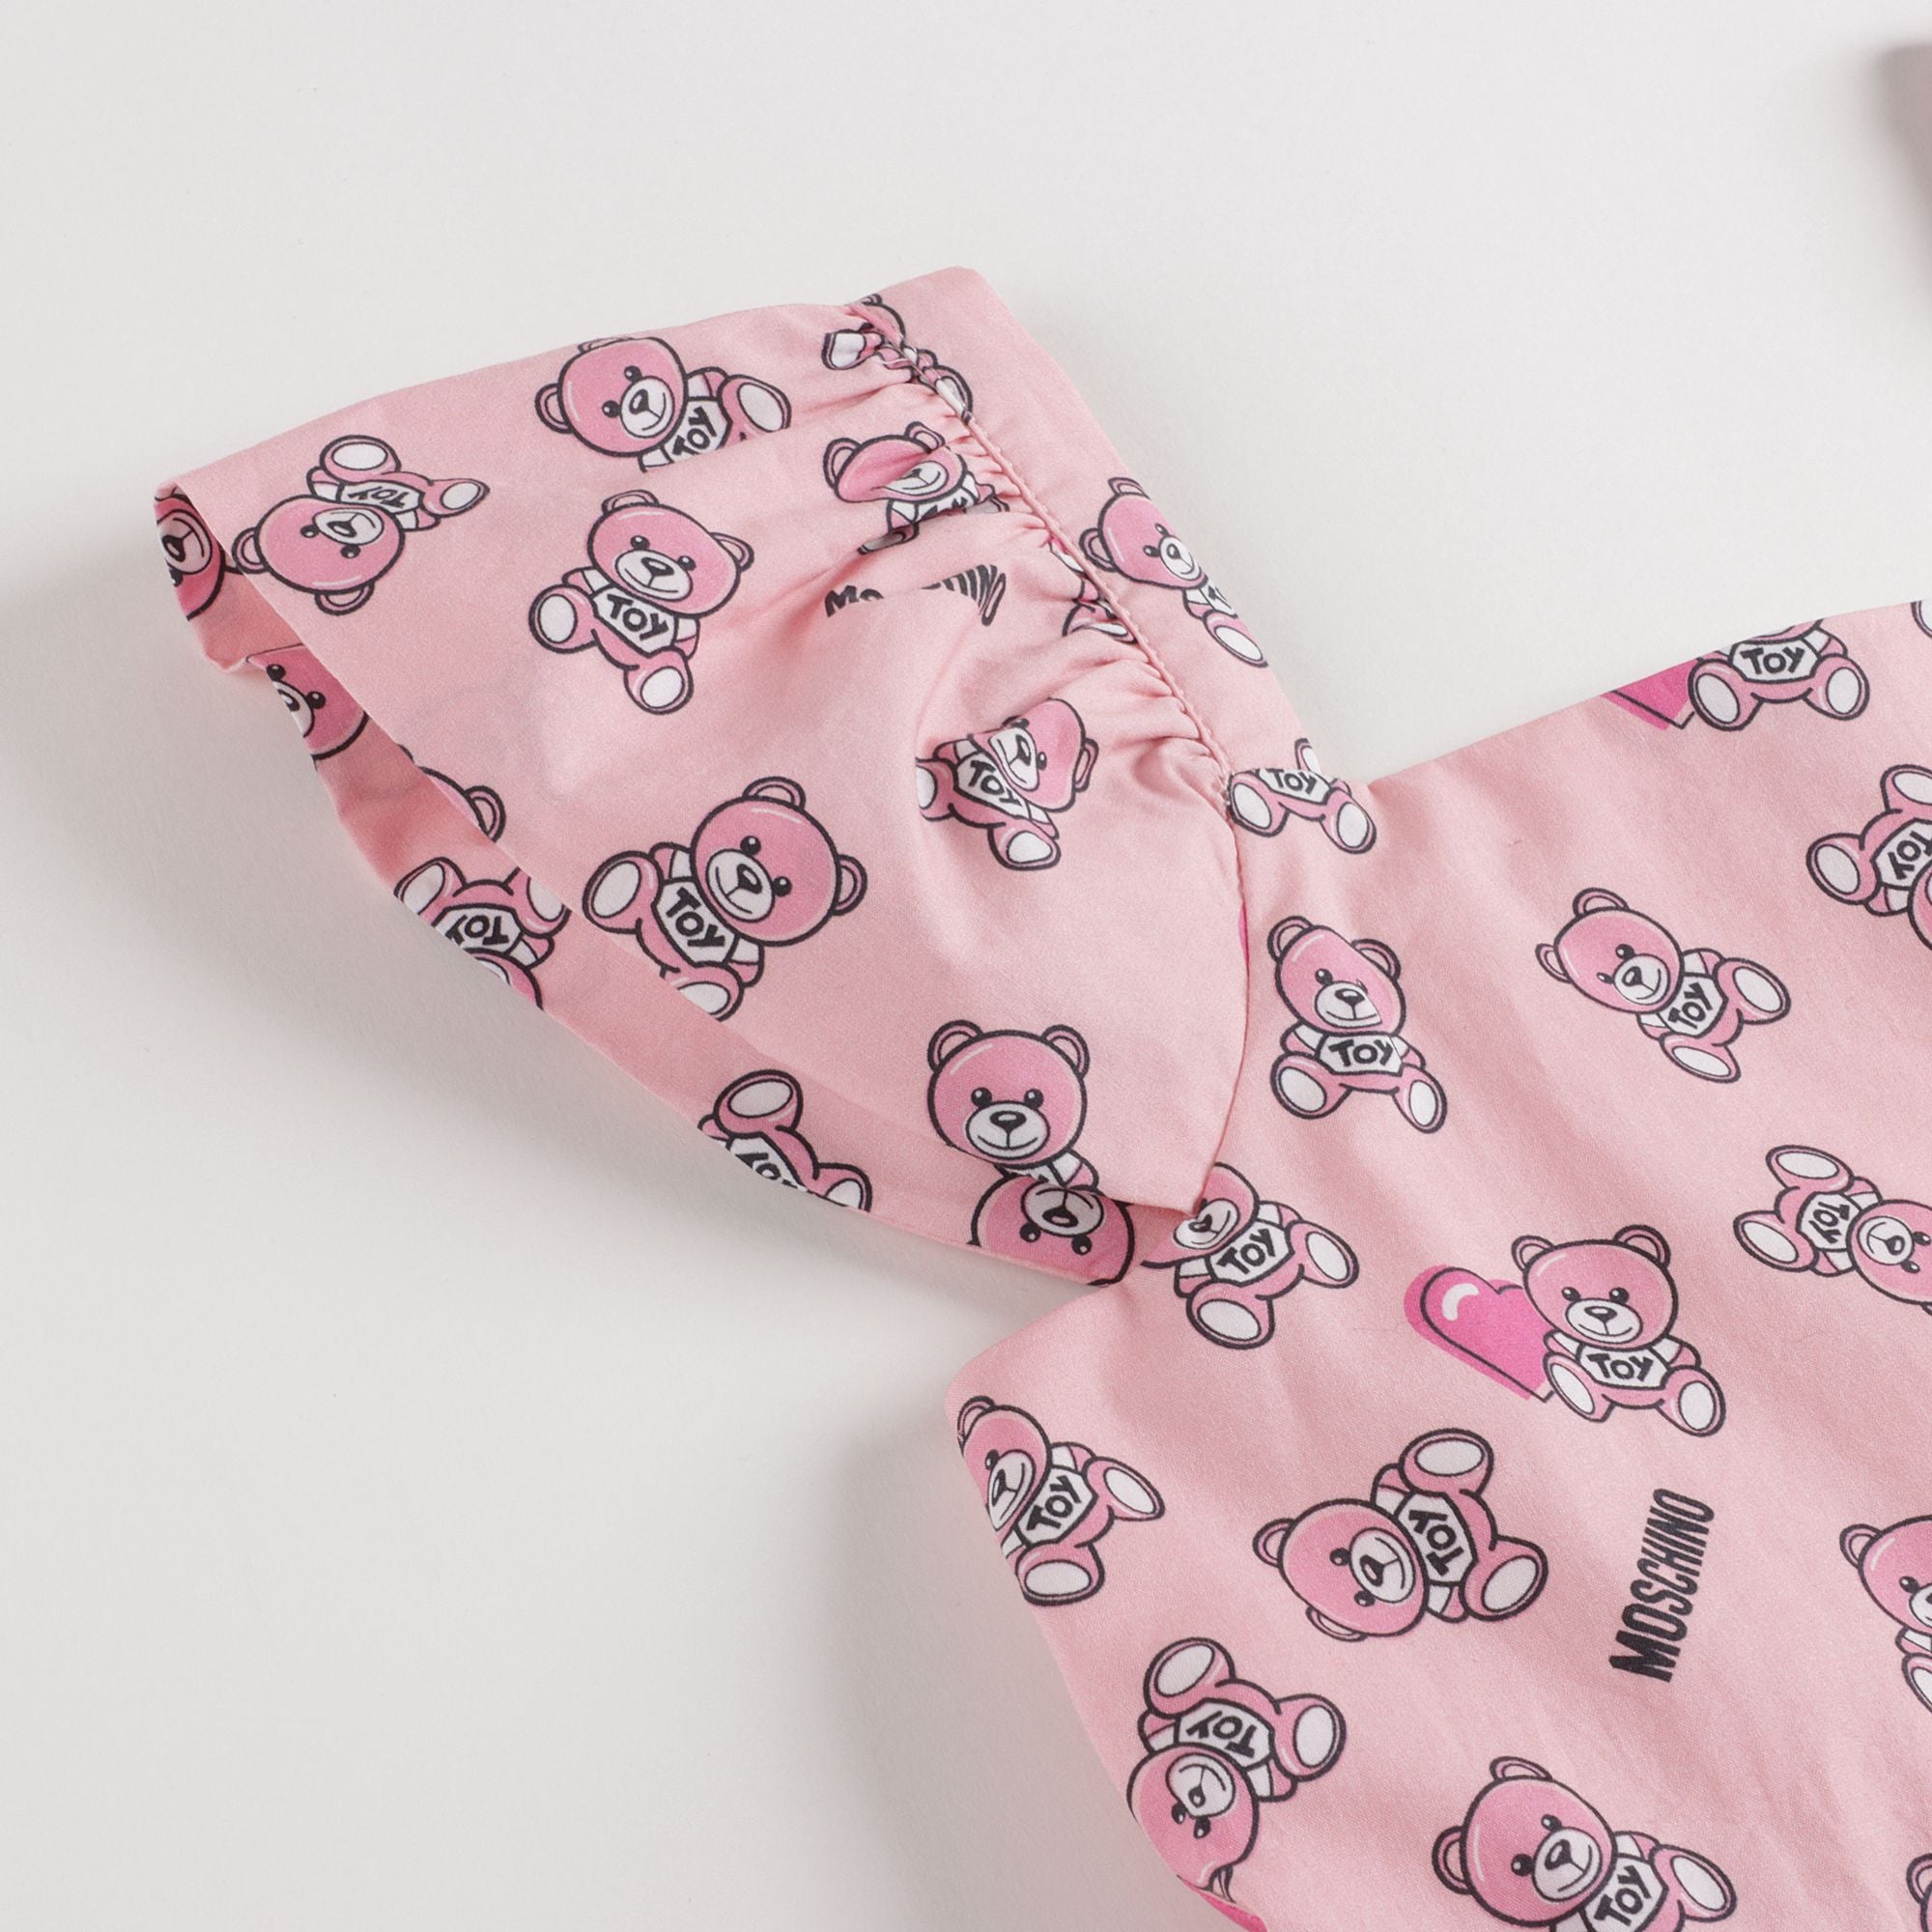 Baby Girls Pink Toy Cotton Dress